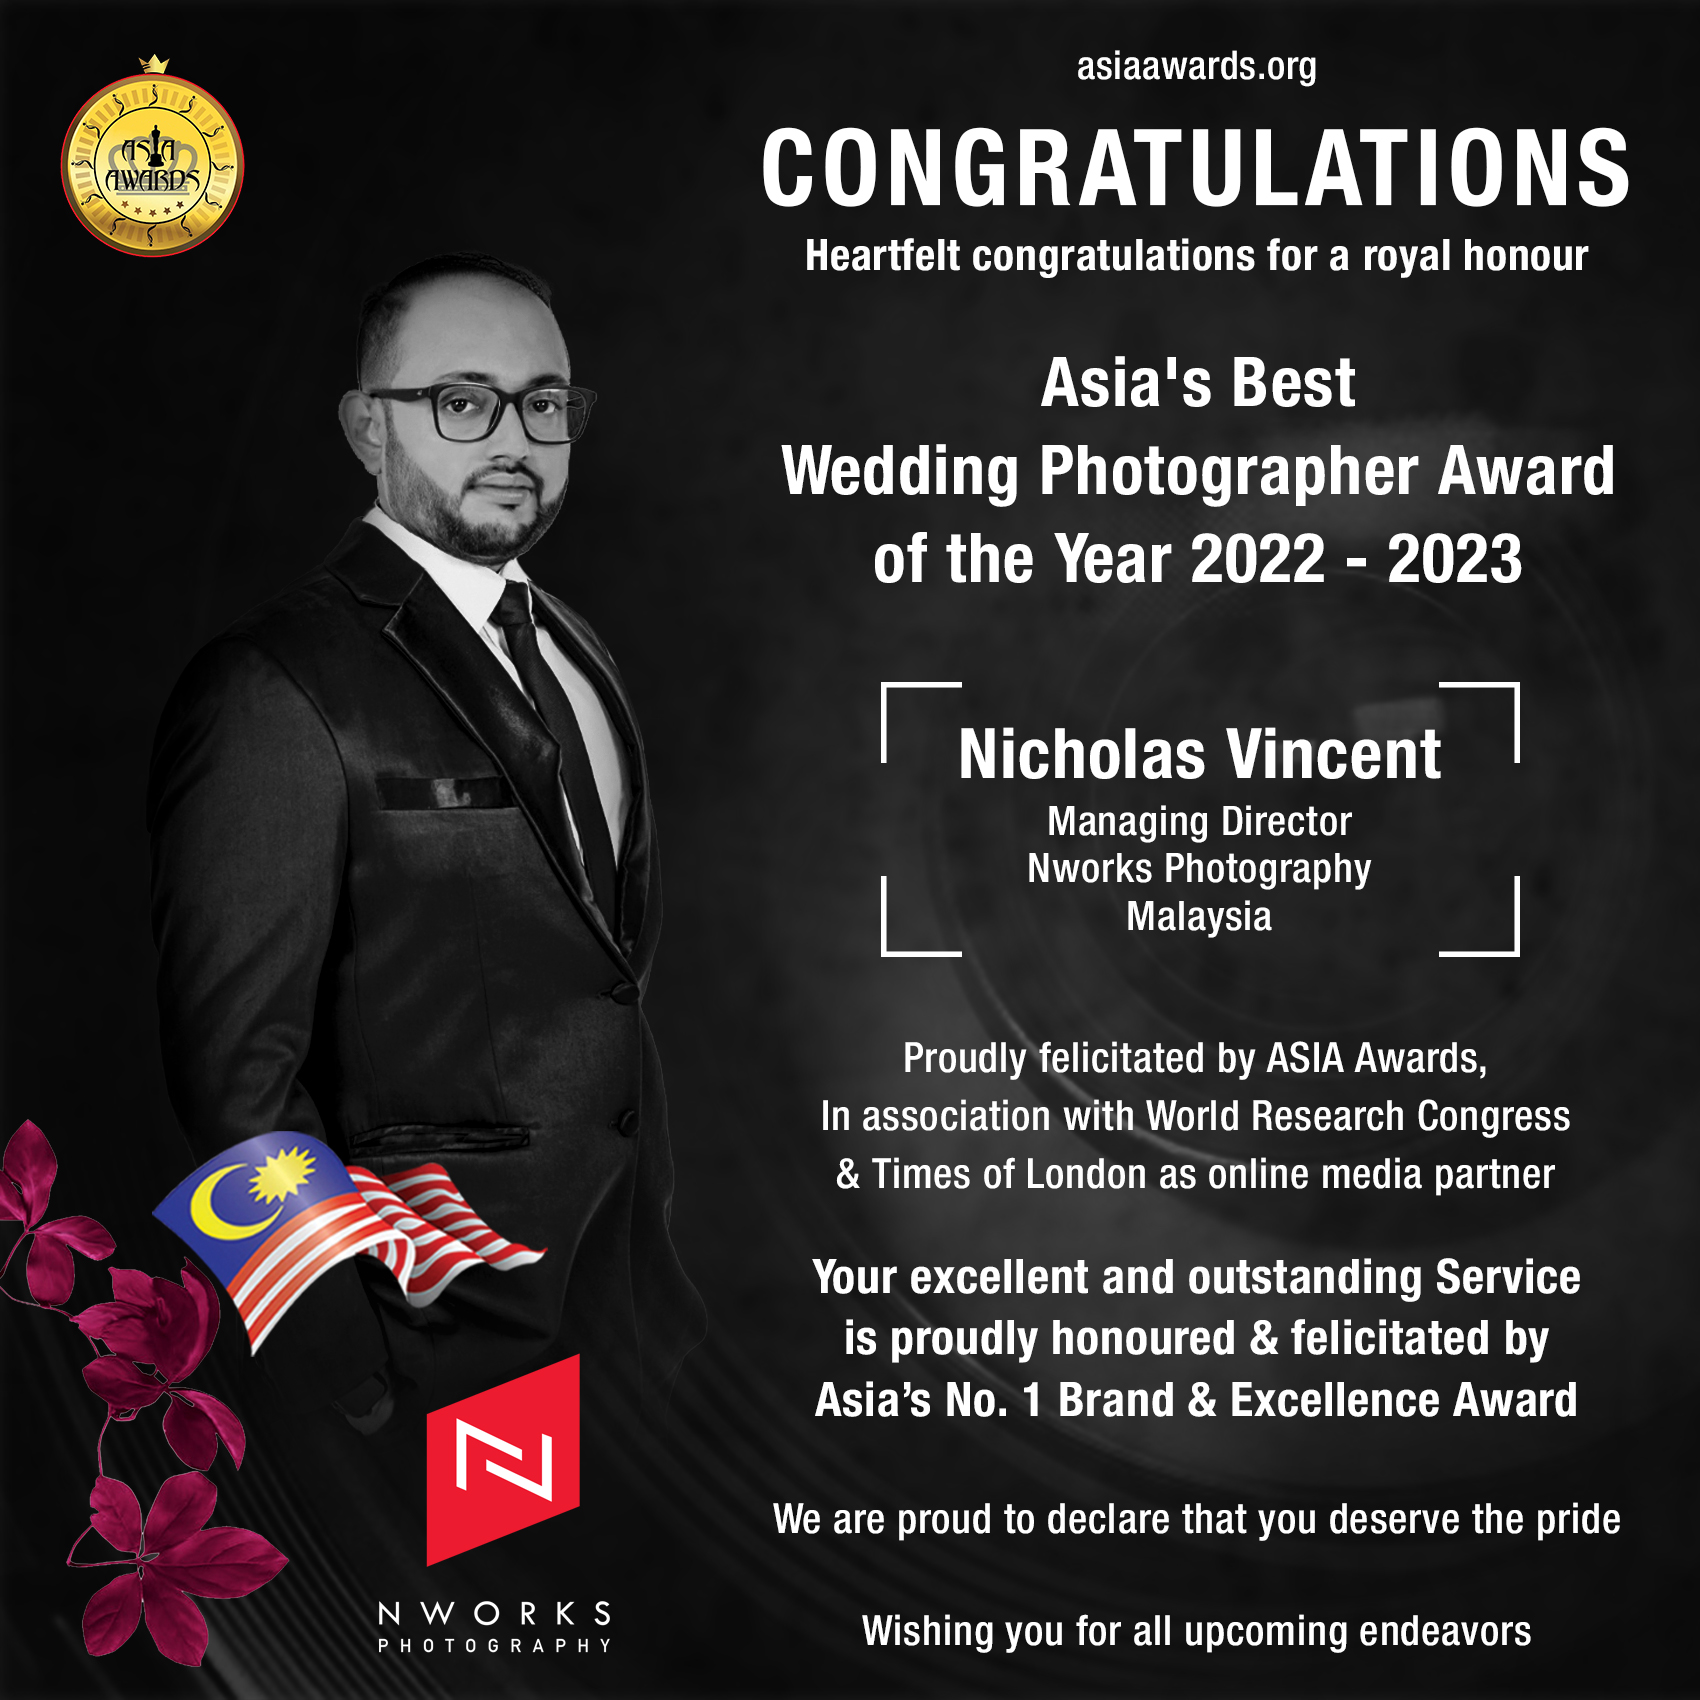 Nicholas Vincent has bagged Asia's Best Wedding Photographer Award